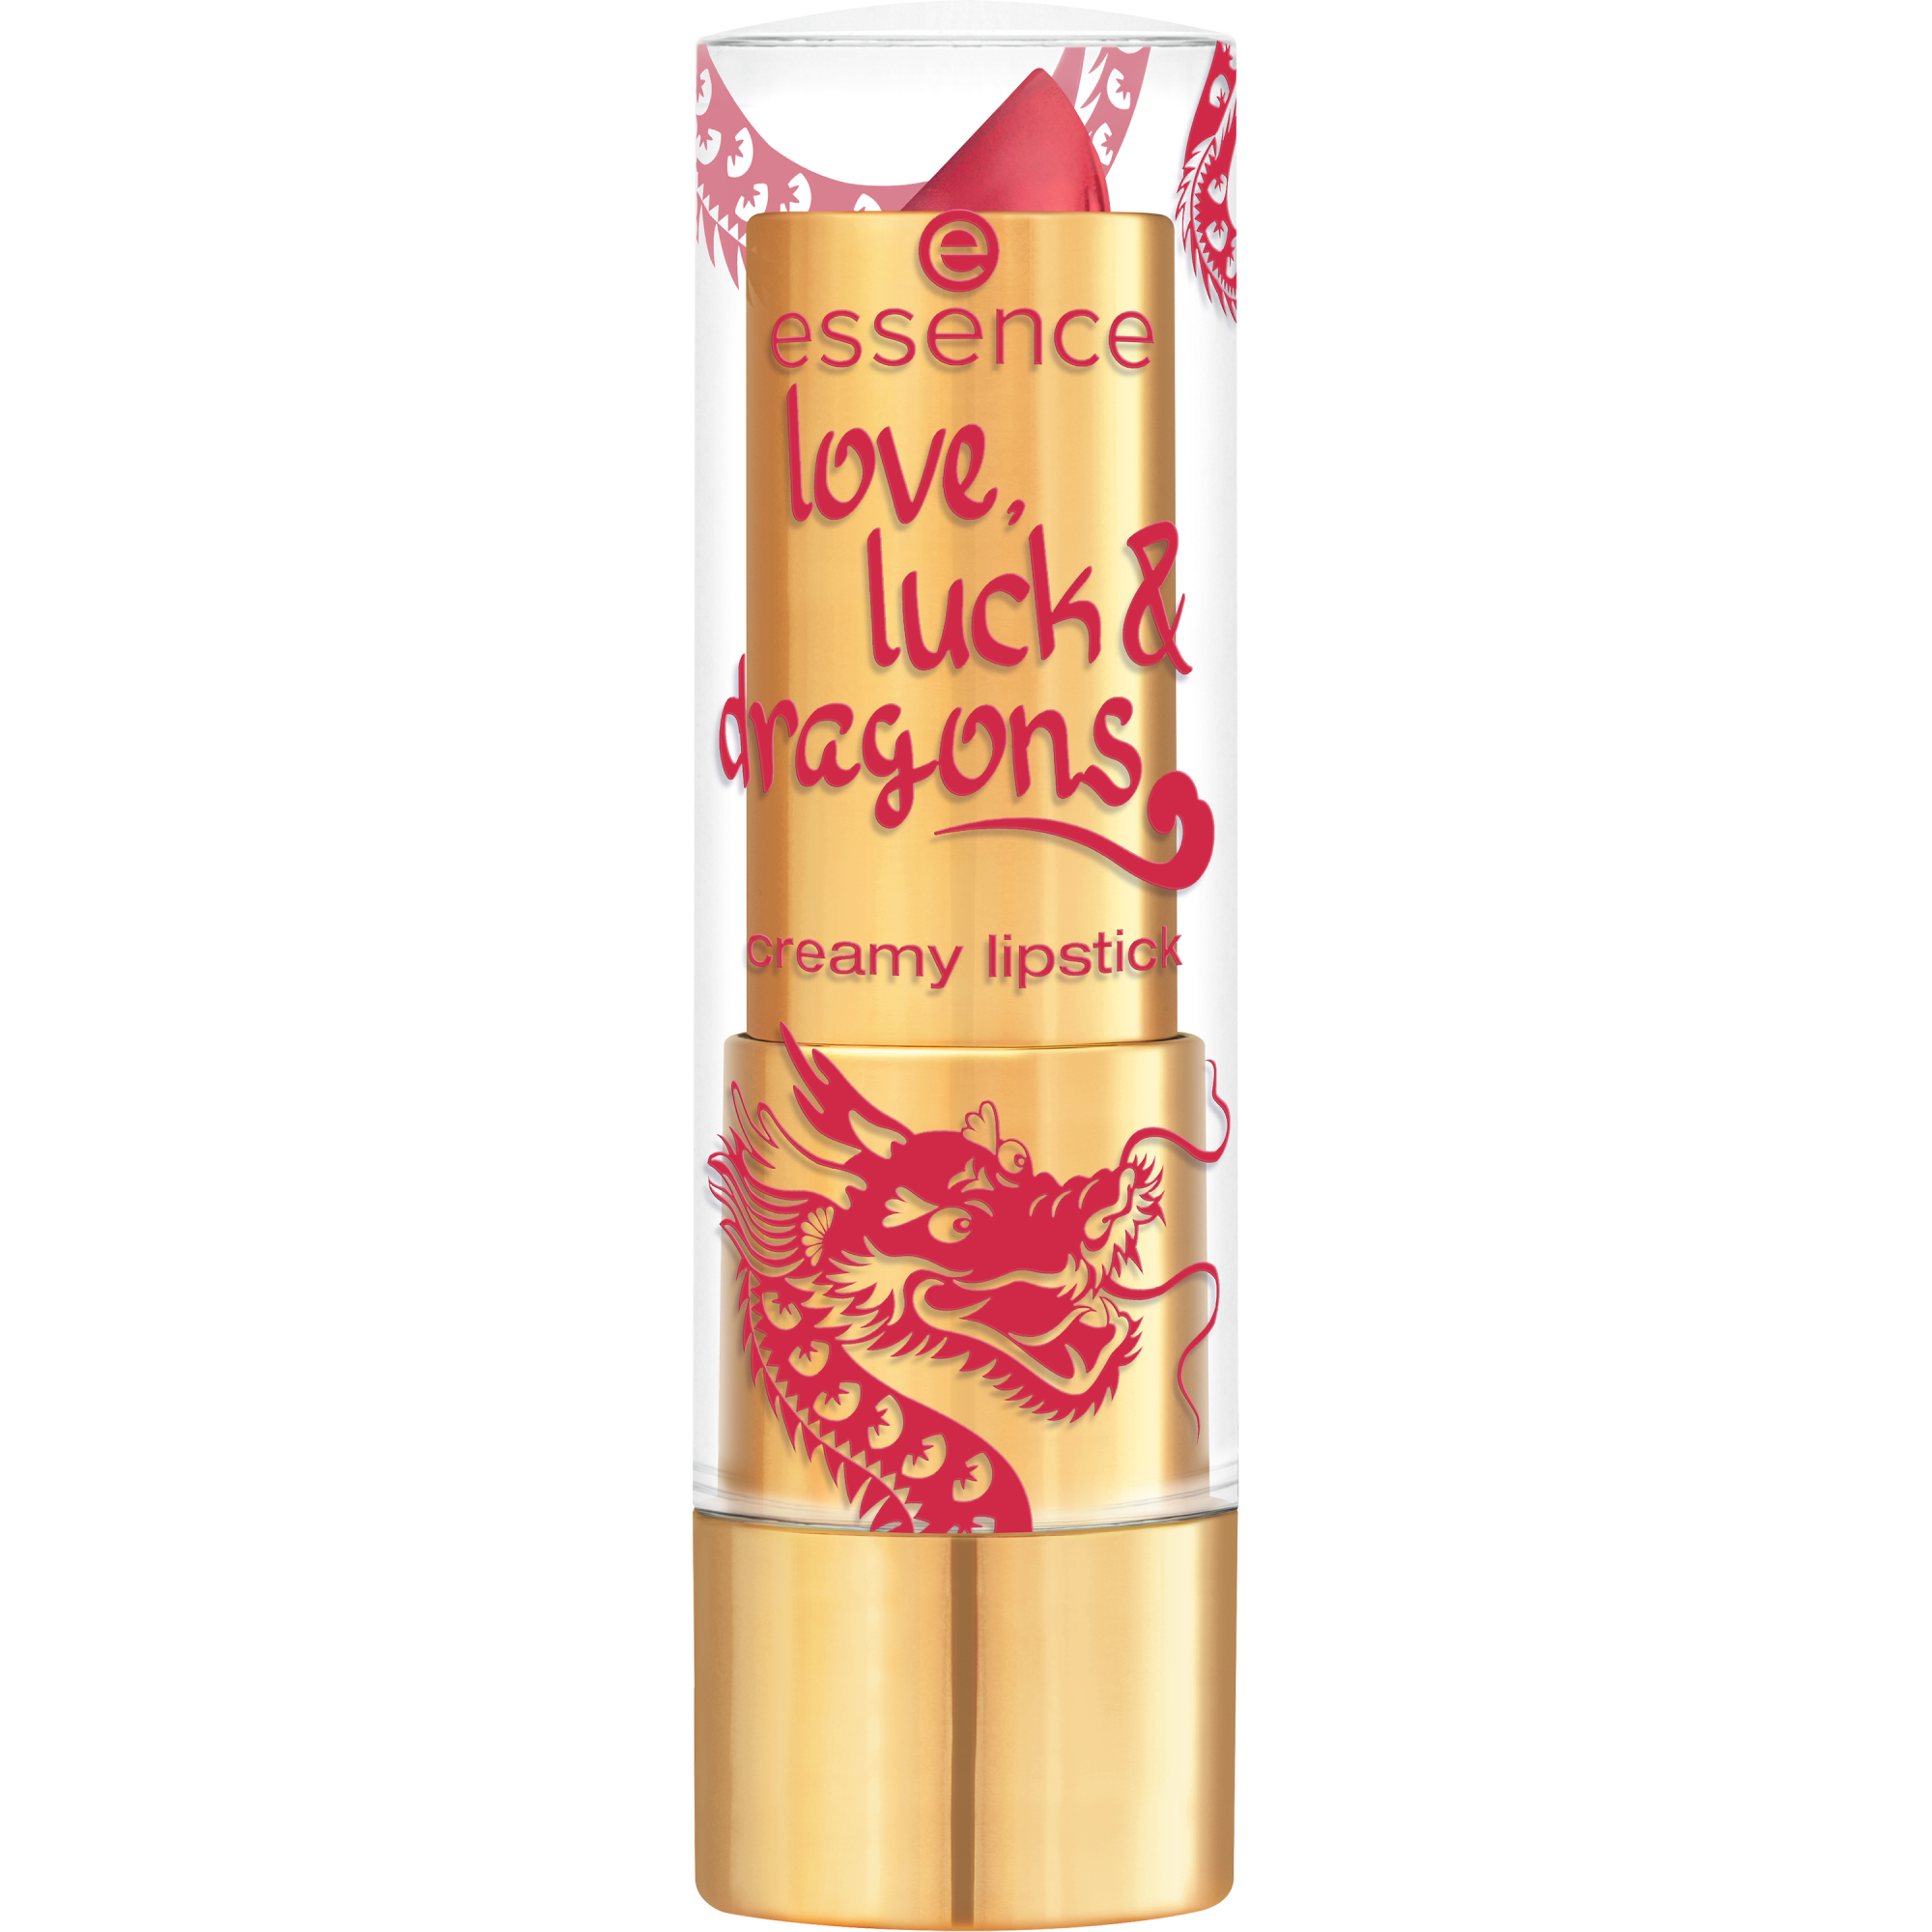 Lūpų dažai love, luck & dragons creamy lipstick